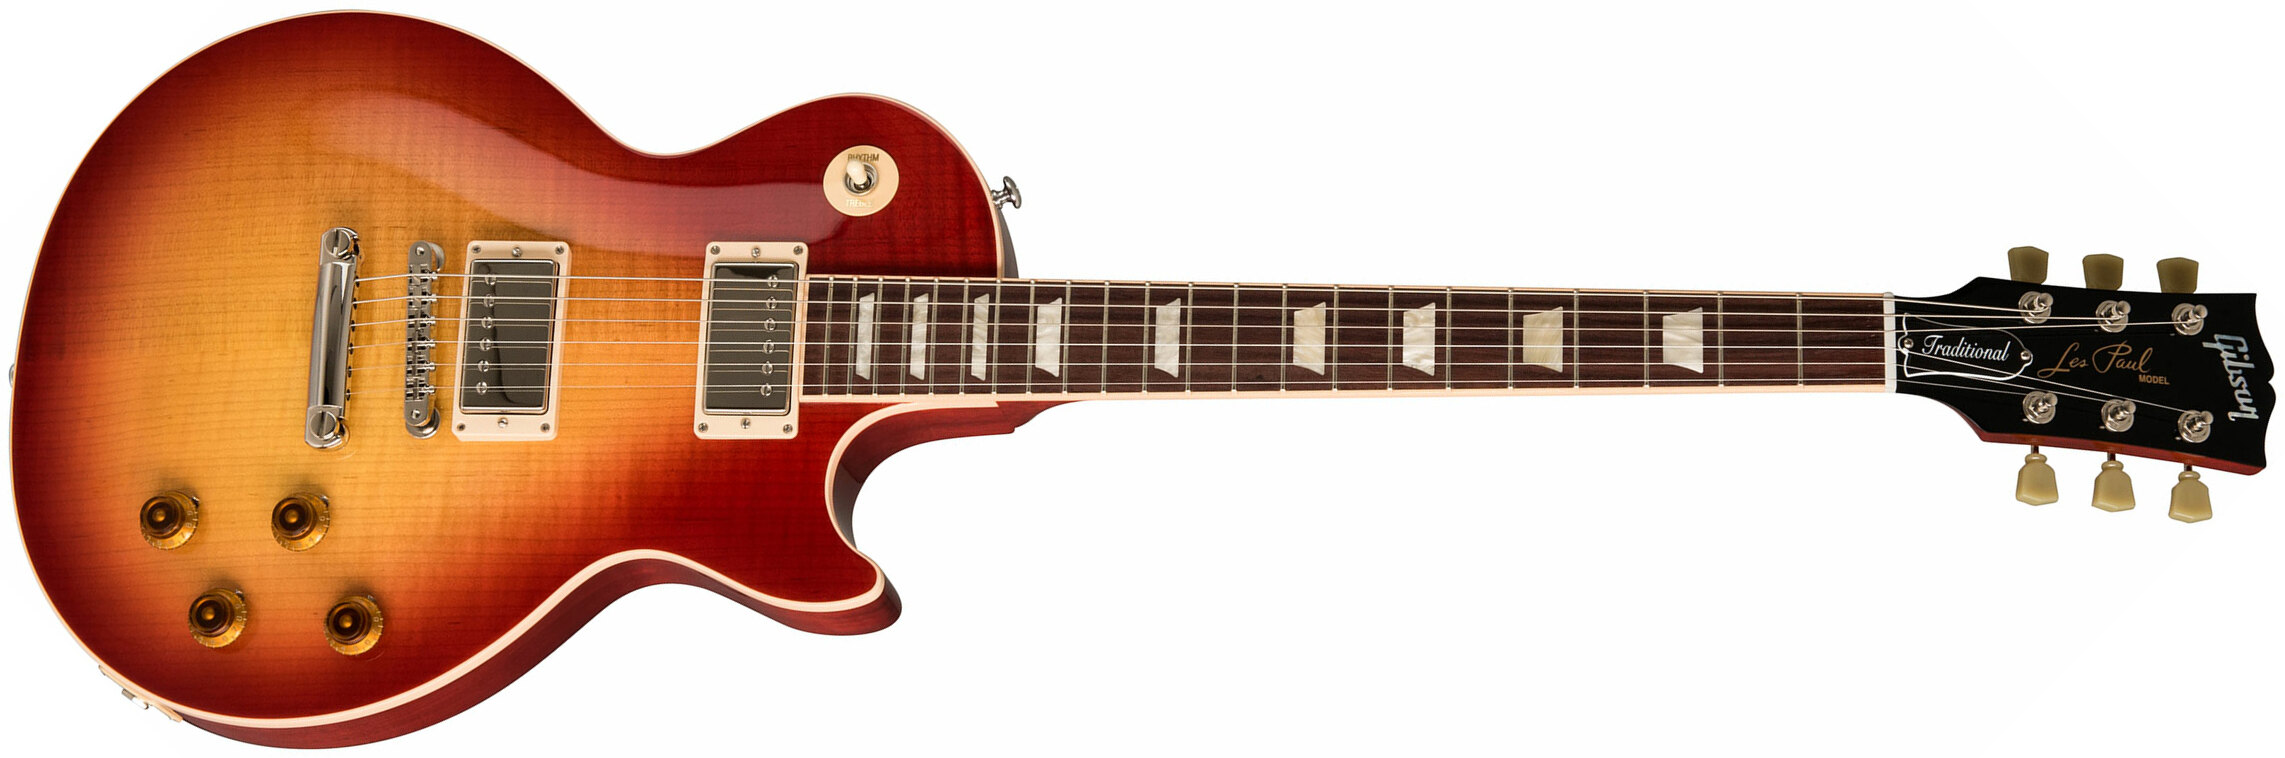 Gibson Les Paul Traditional 2019 2h Ht Rw - Heritage Cherry Sunburst - Enkel gesneden elektrische gitaar - Main picture